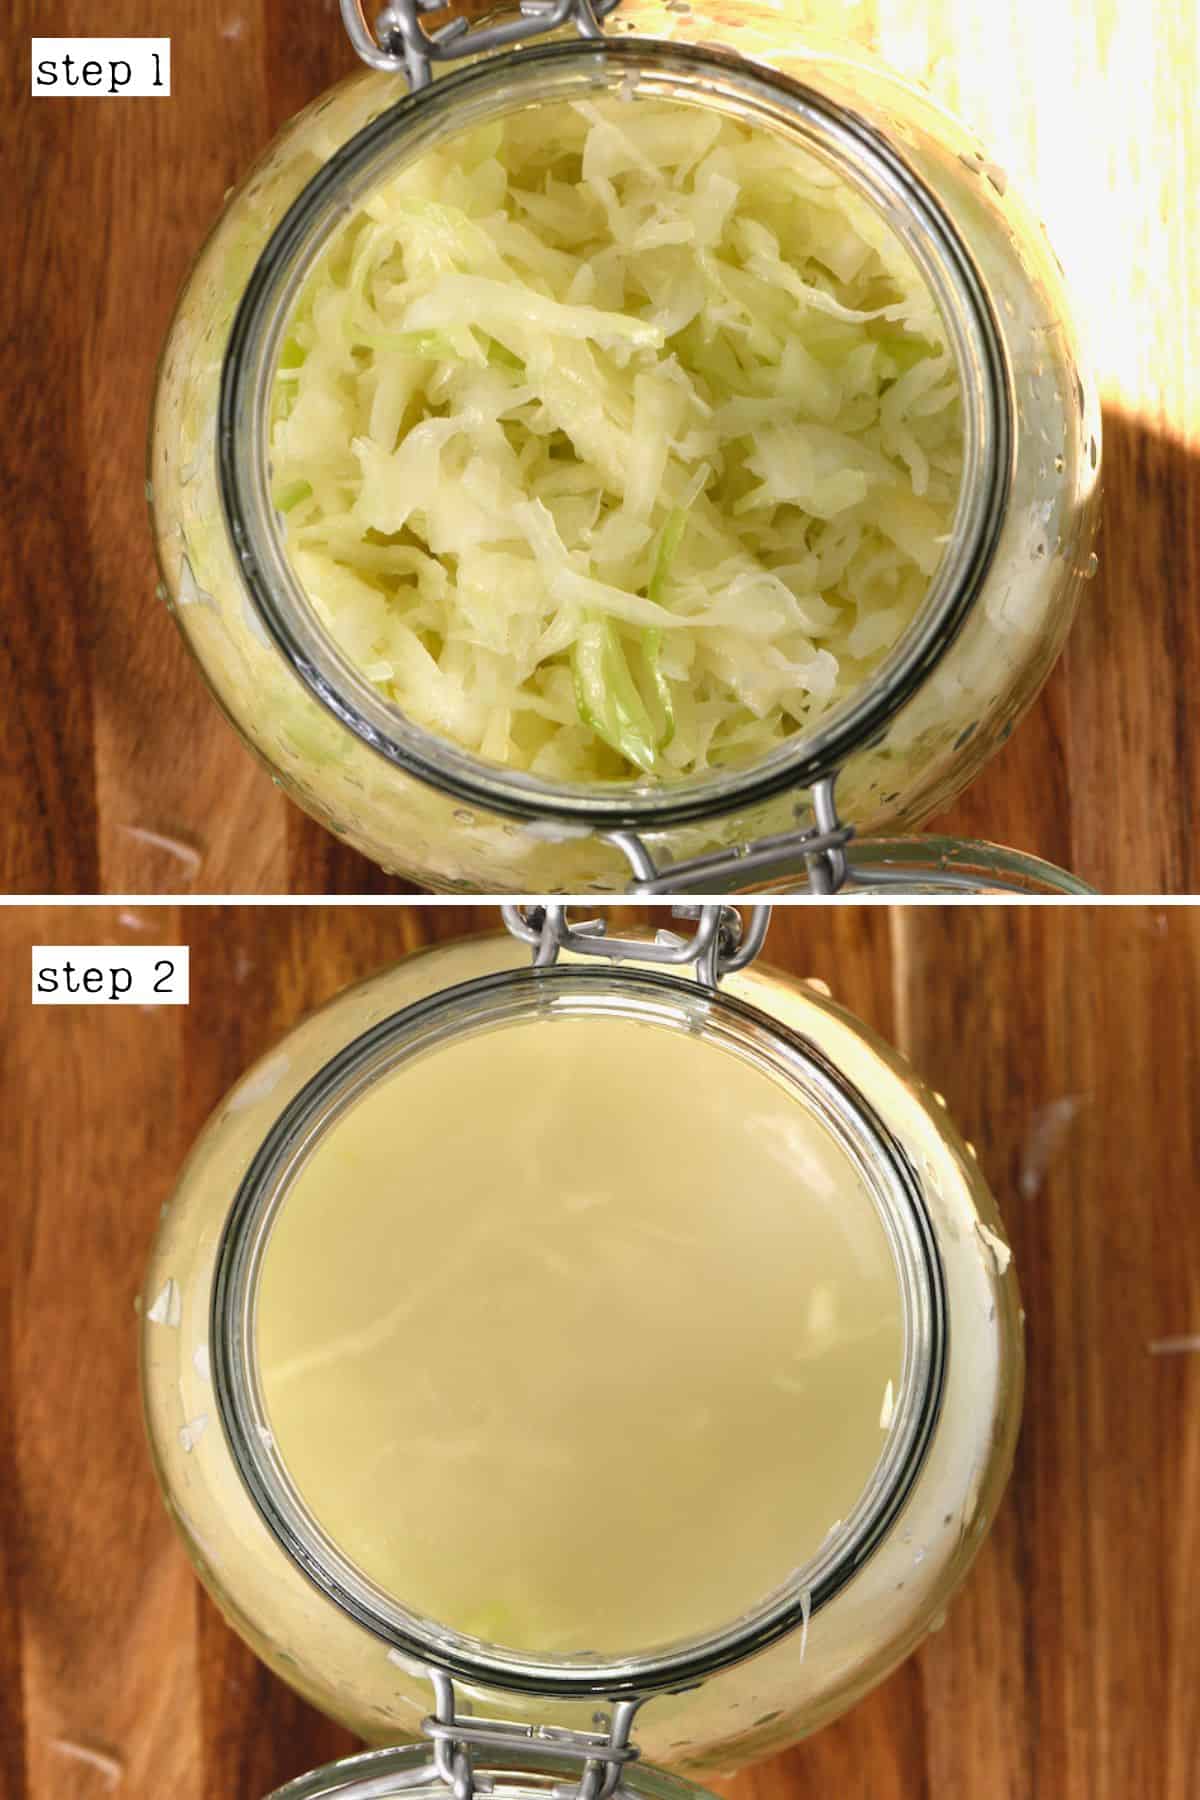 Steps for making Sauerkraut